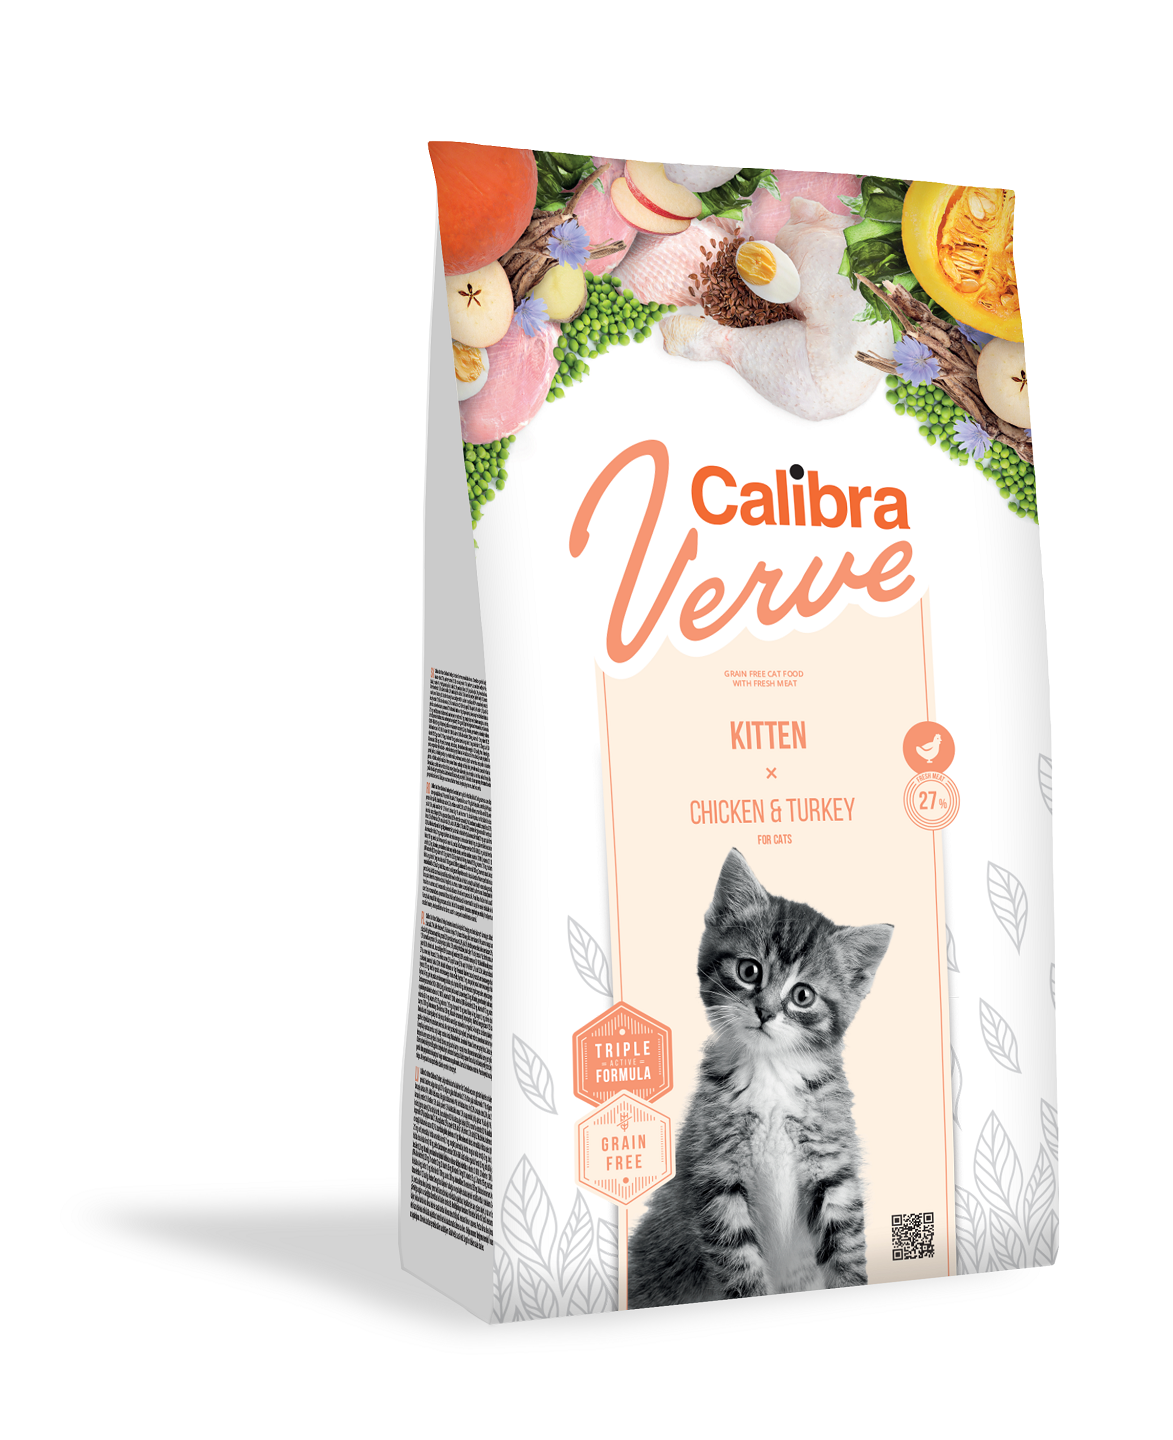 Calibra Cat Verve Grain Free Kitten, Chicken & Turkey, 3.5 kg petmart